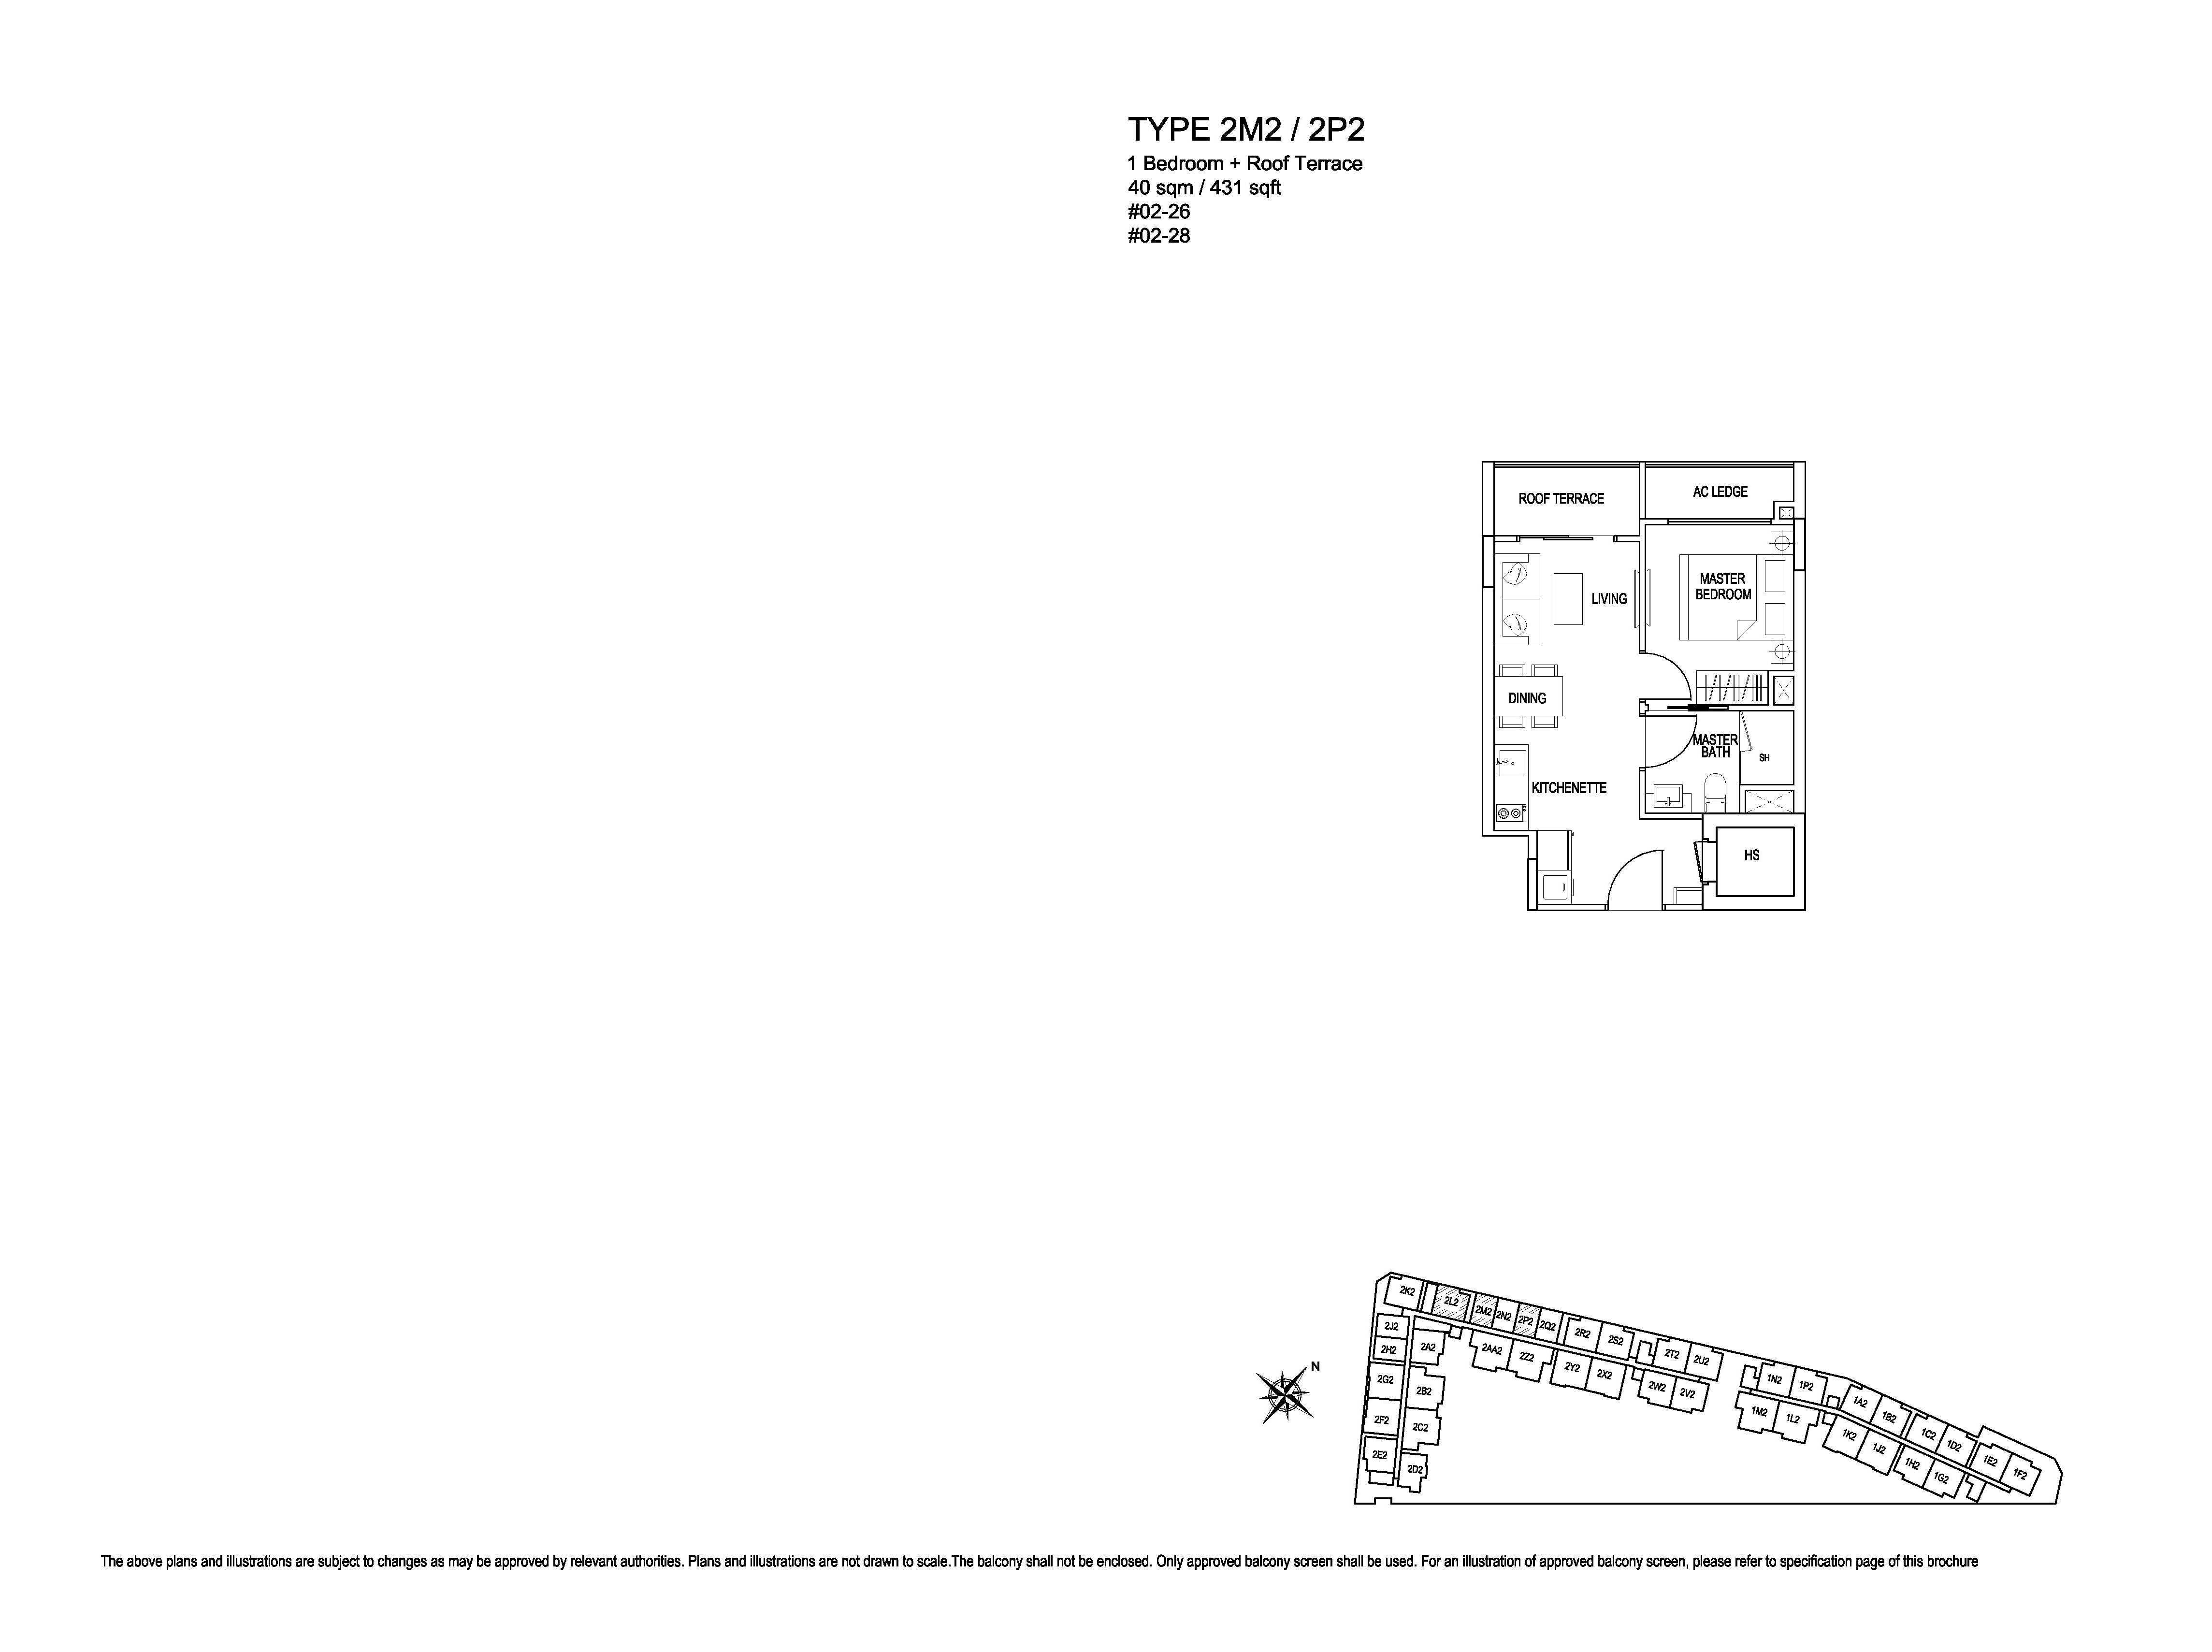 Kensington Square 1 Bedroom Floor Plans Type 2M2/2P2